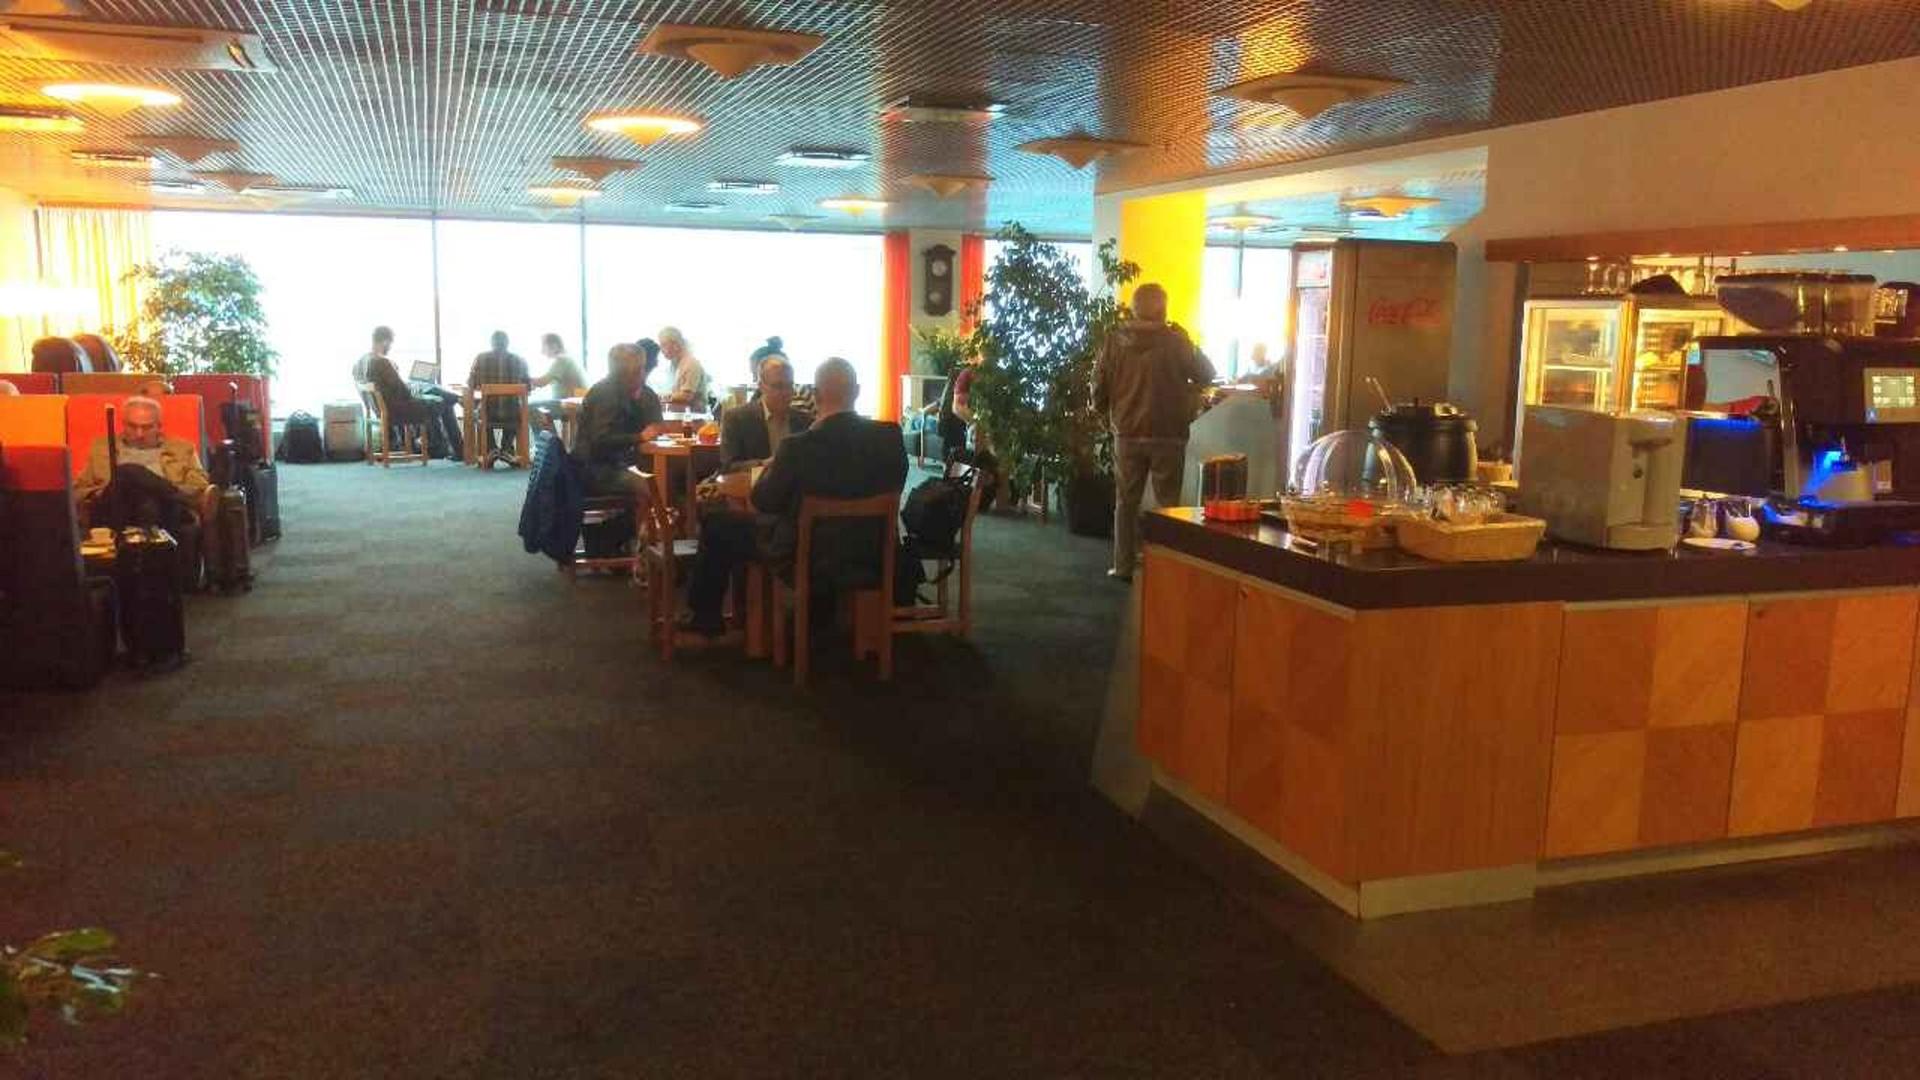 Tallinn Airport LHV Lounge image 11 of 20